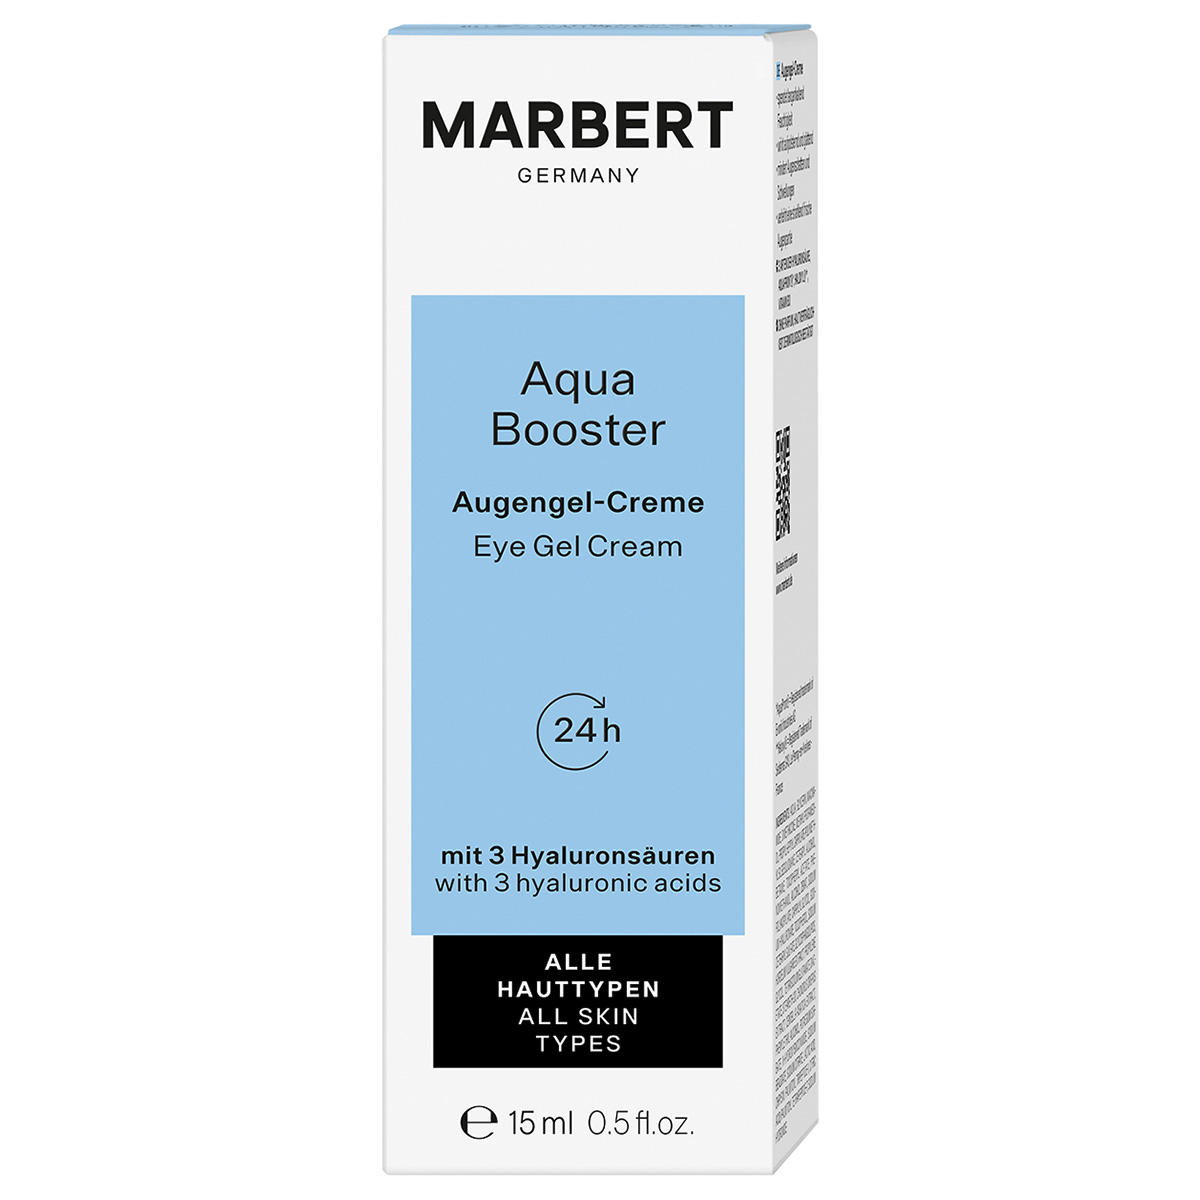 Marbert Aqua Booster Augengel-Creme 15 ml - 3